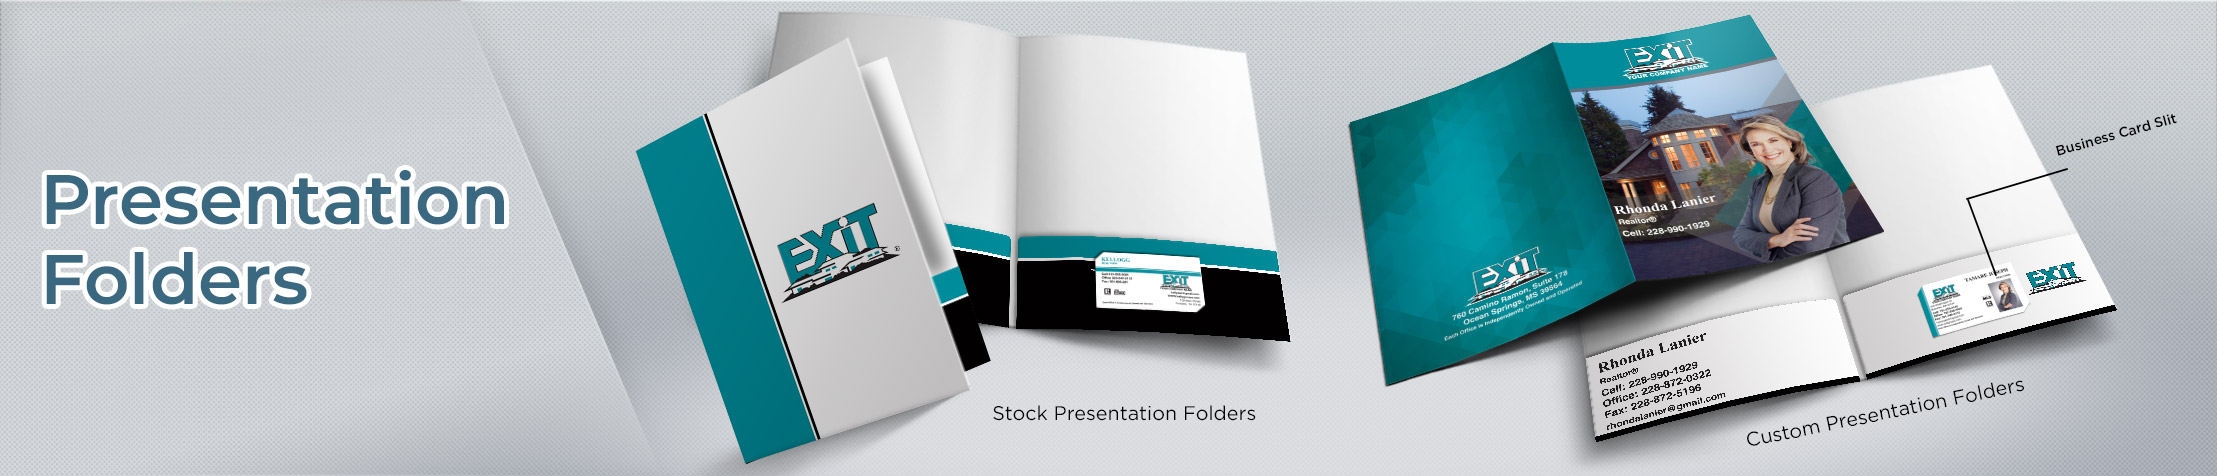 Exit Realty Real Estate Presentation Folders - folders | BestPrintBuy.com